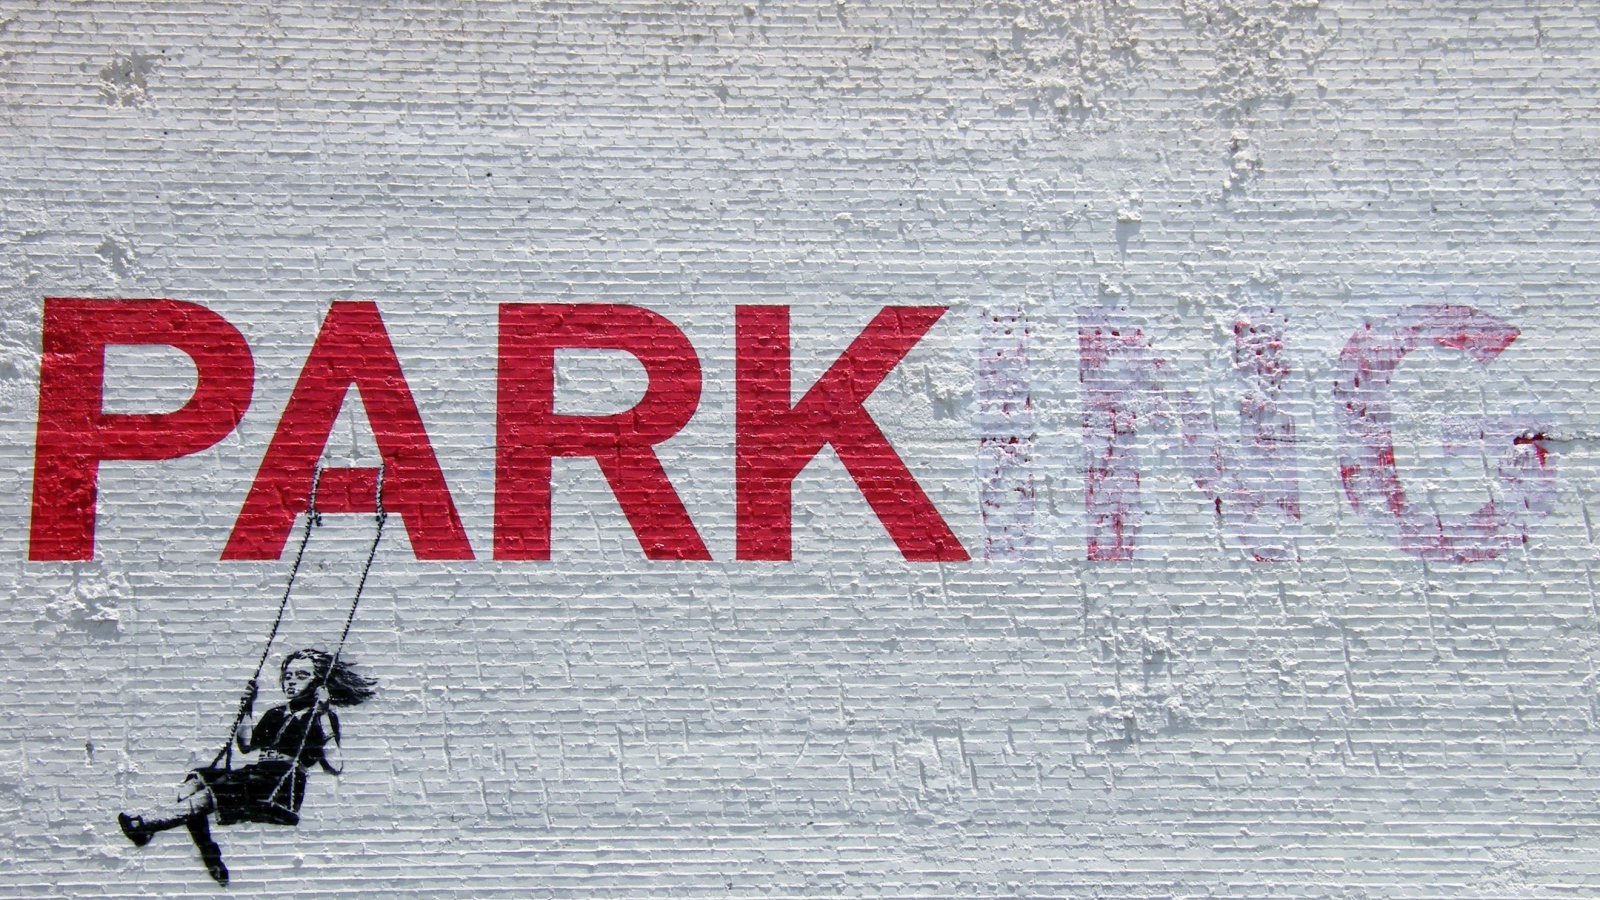 Graffiti, the park, the artist Banksy